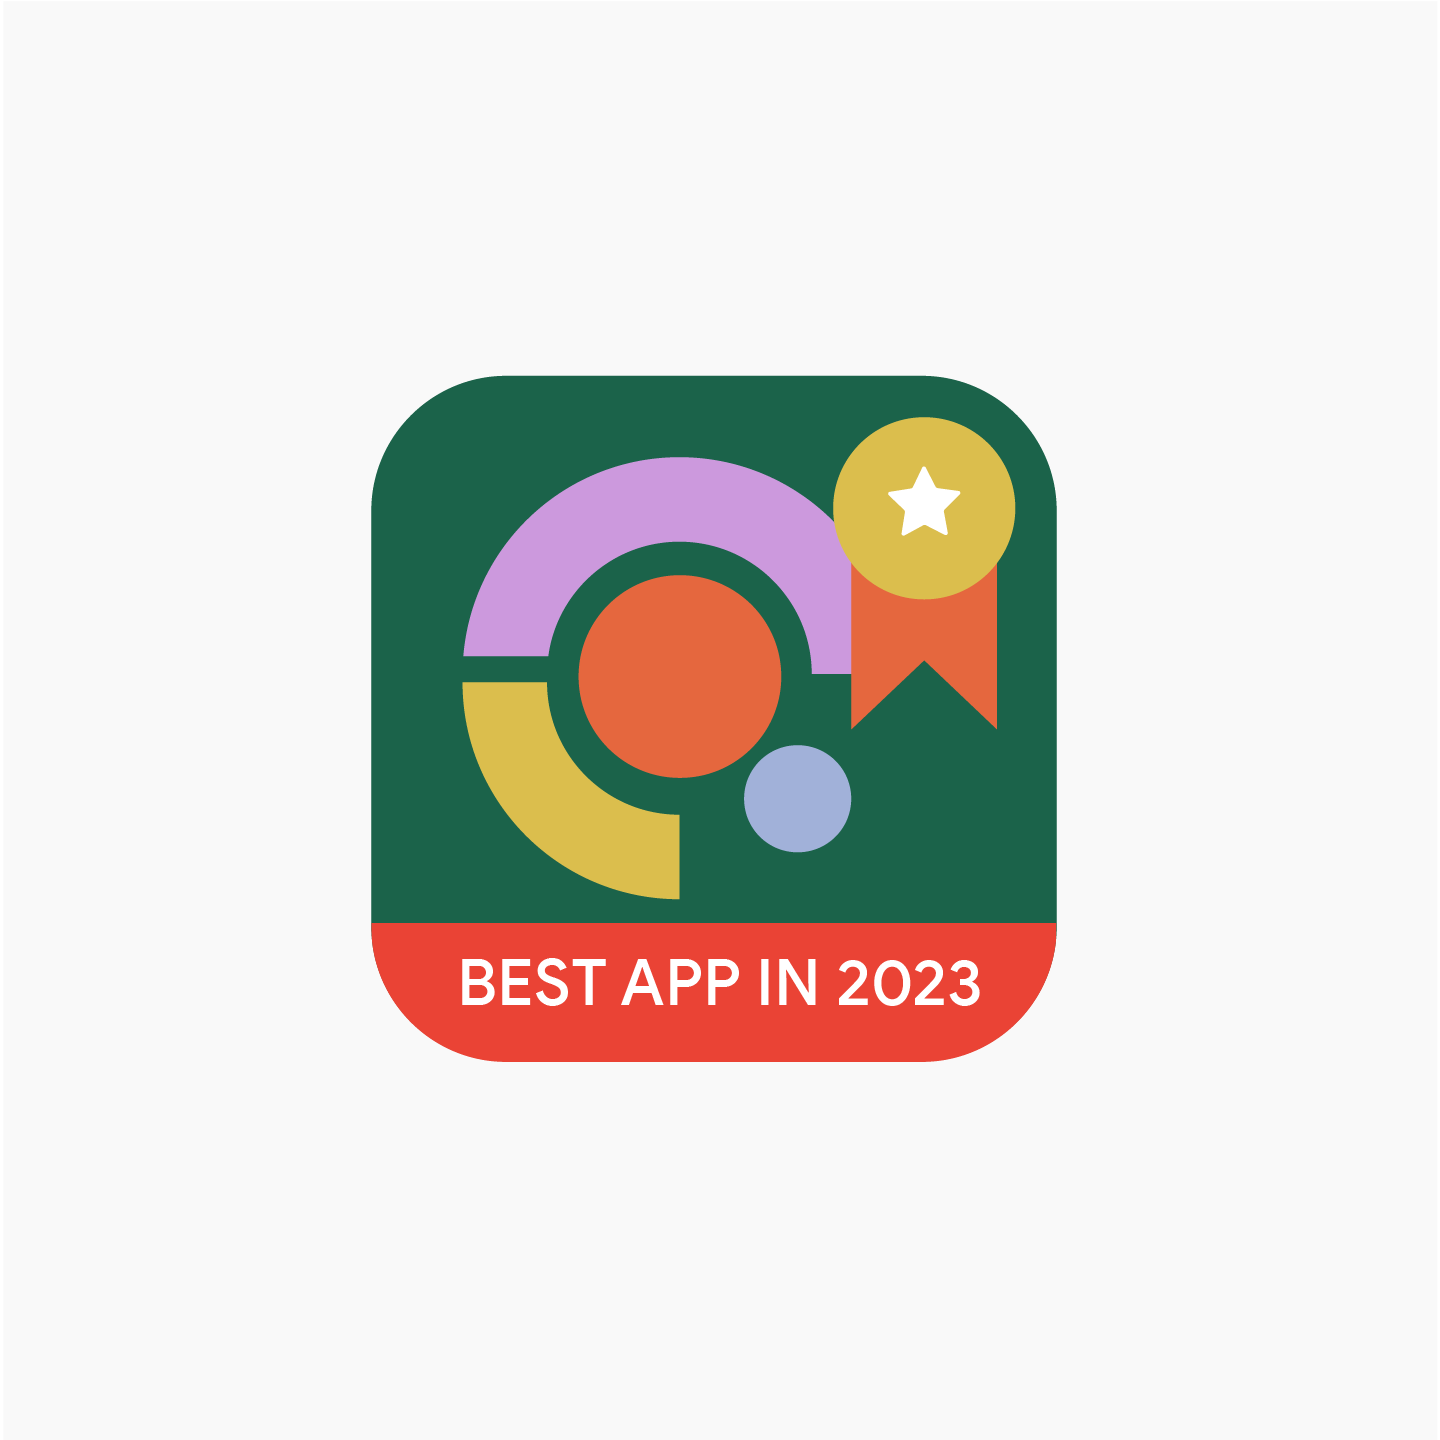 Google Play App Short & Long Description Guidelines in 2023